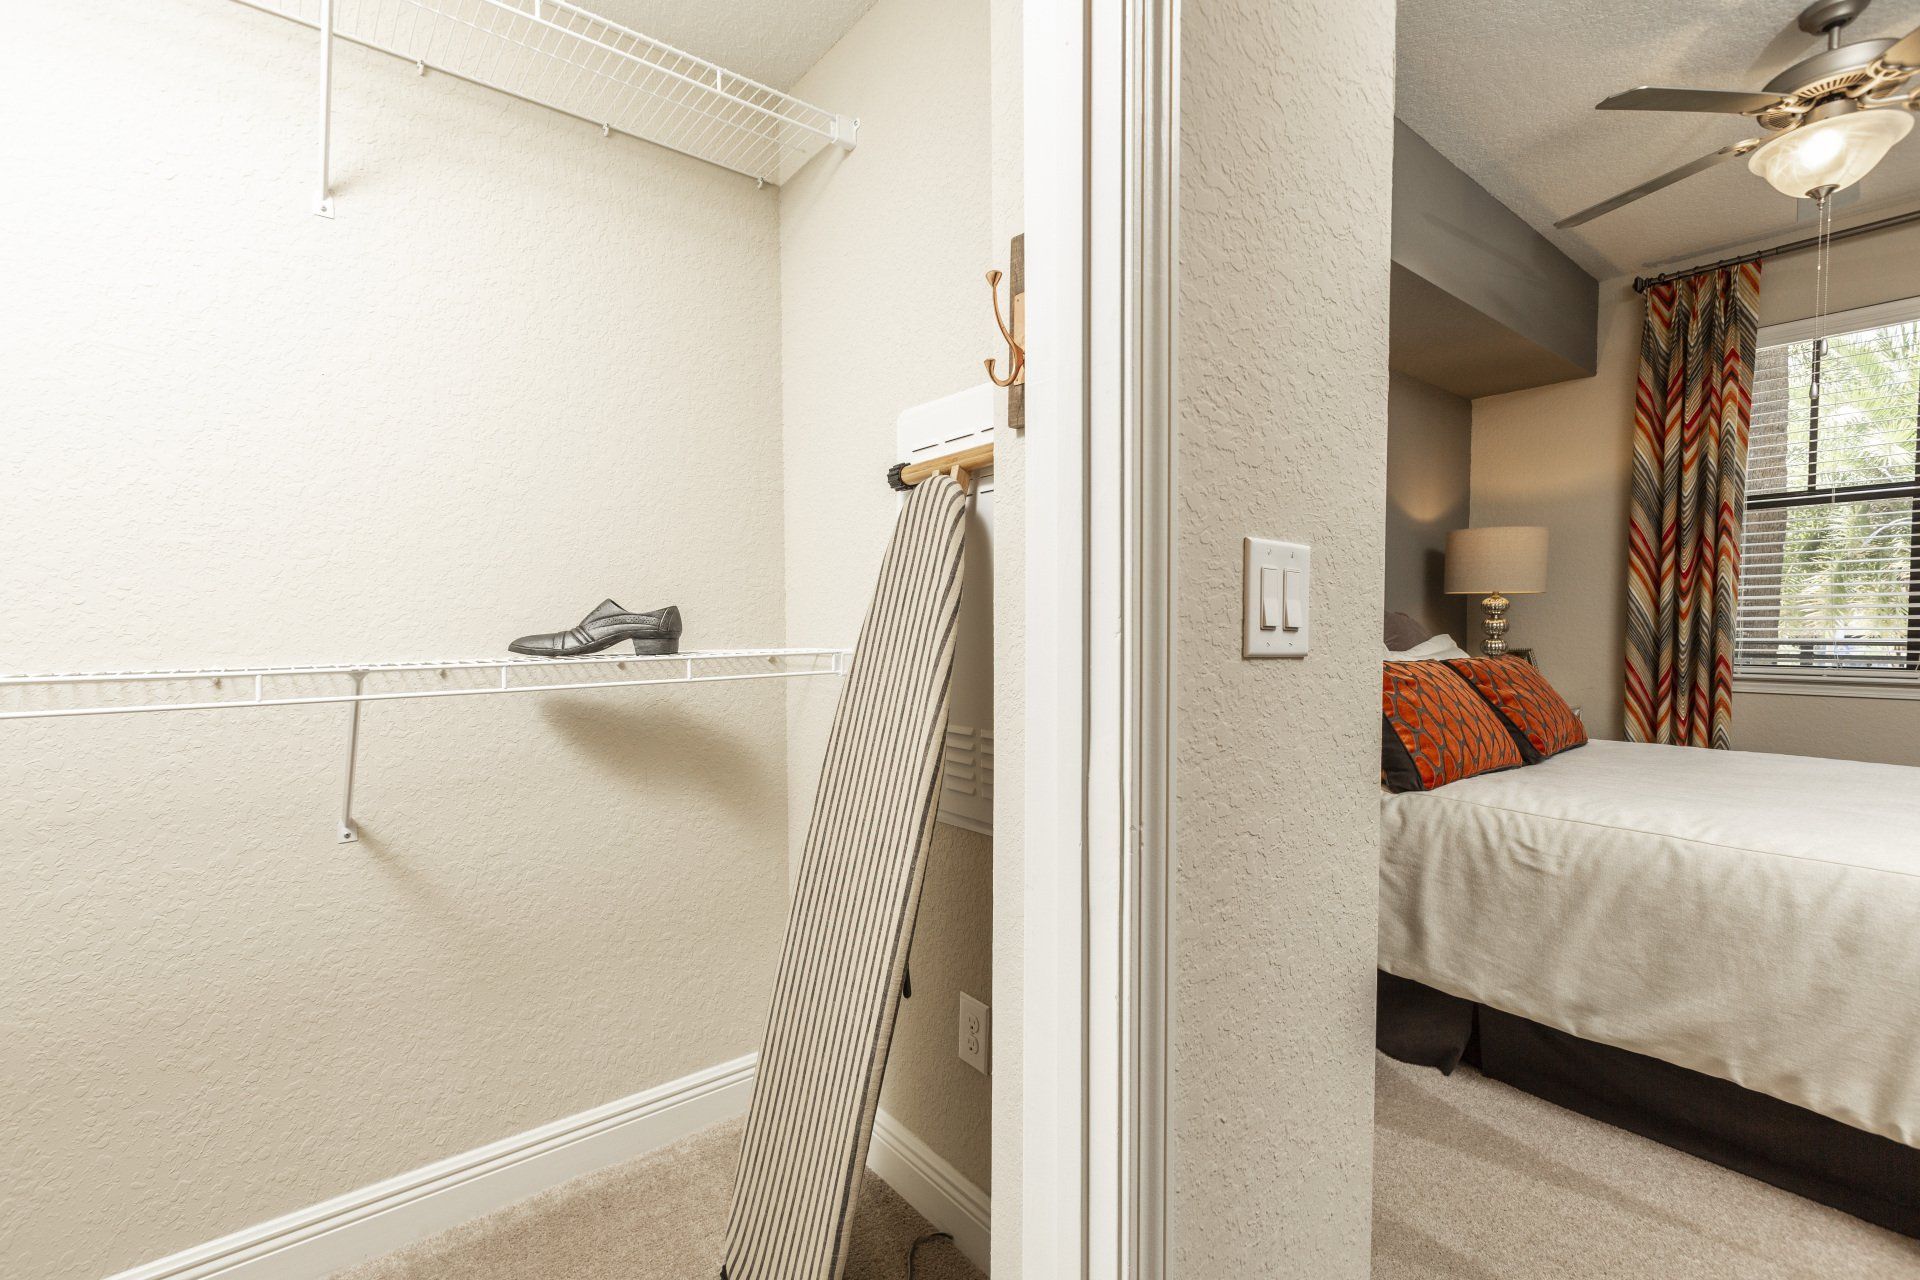 2Bayshore | Spacious Apartment Bedroom Floor Plan for Rent